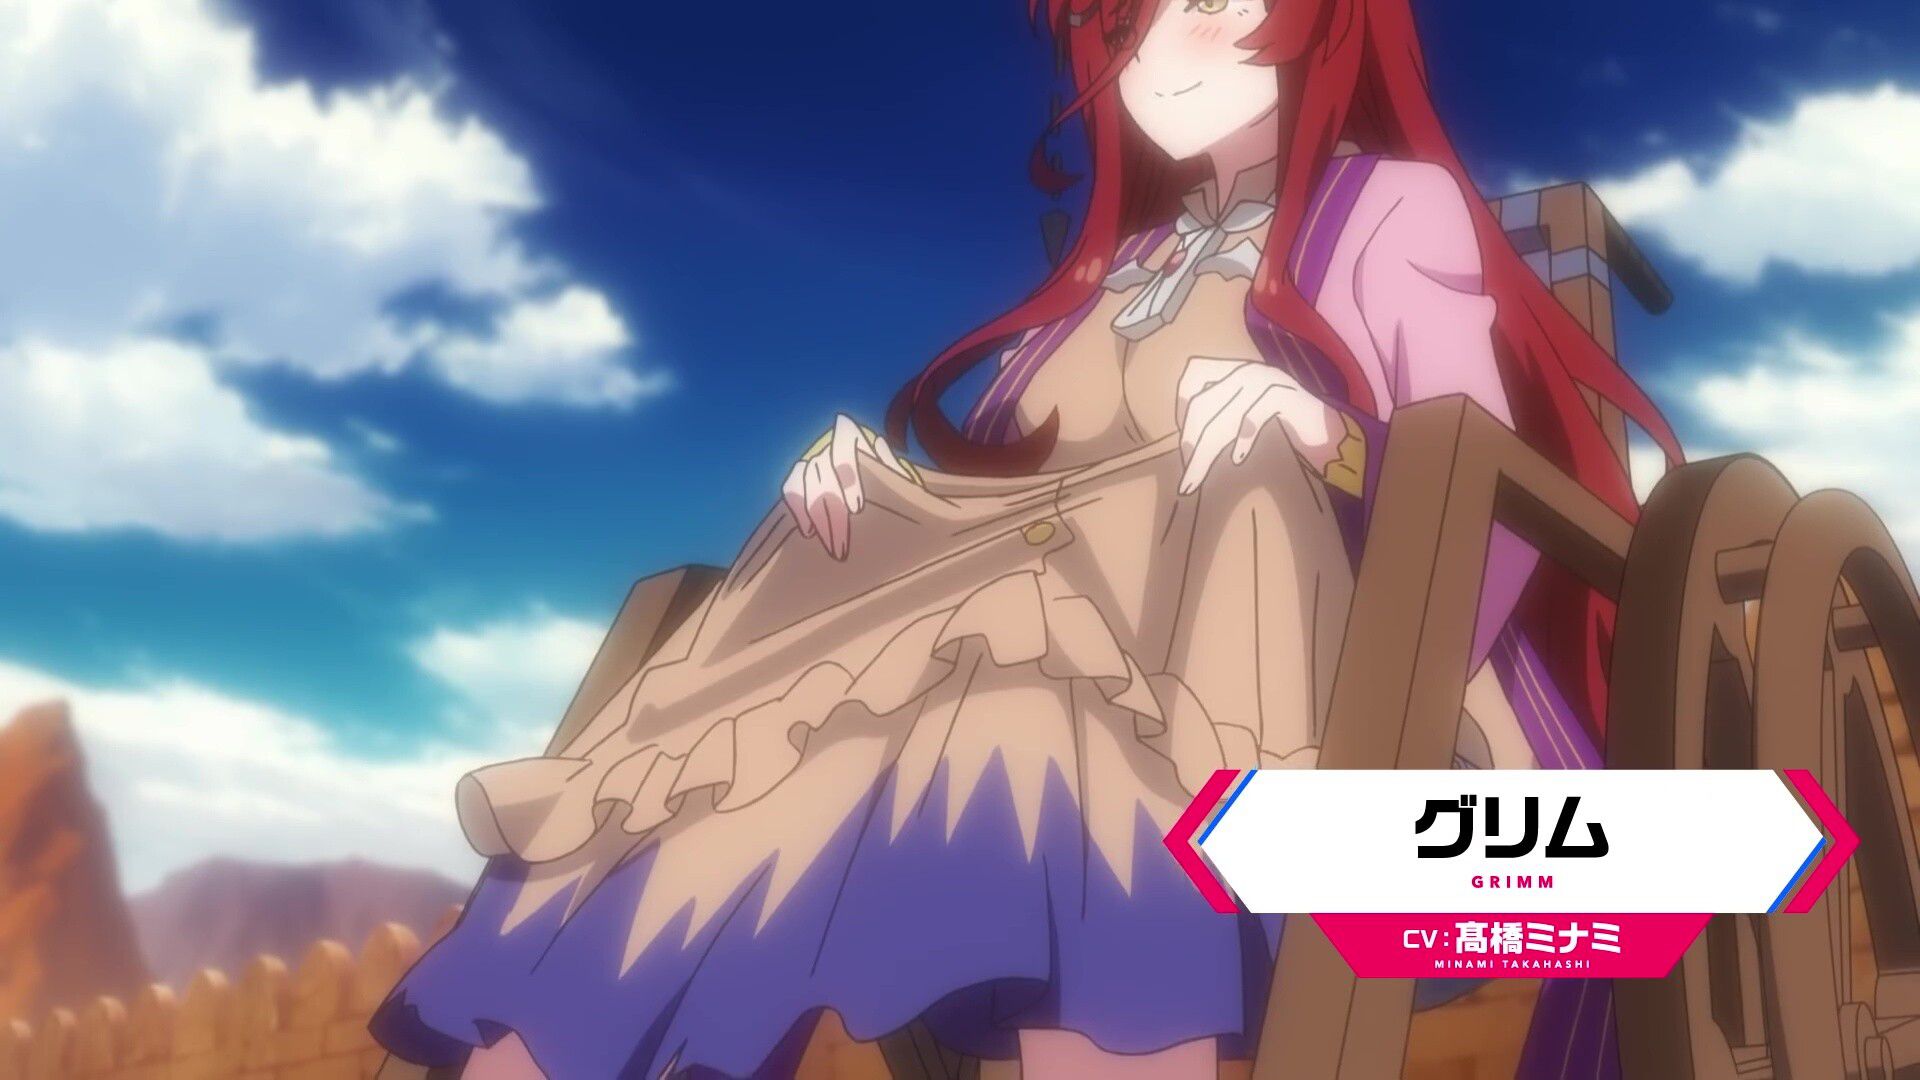 Anime "Combatant, I'm dispatched! Erotic costume girls and neta! April broadcasting starts 22